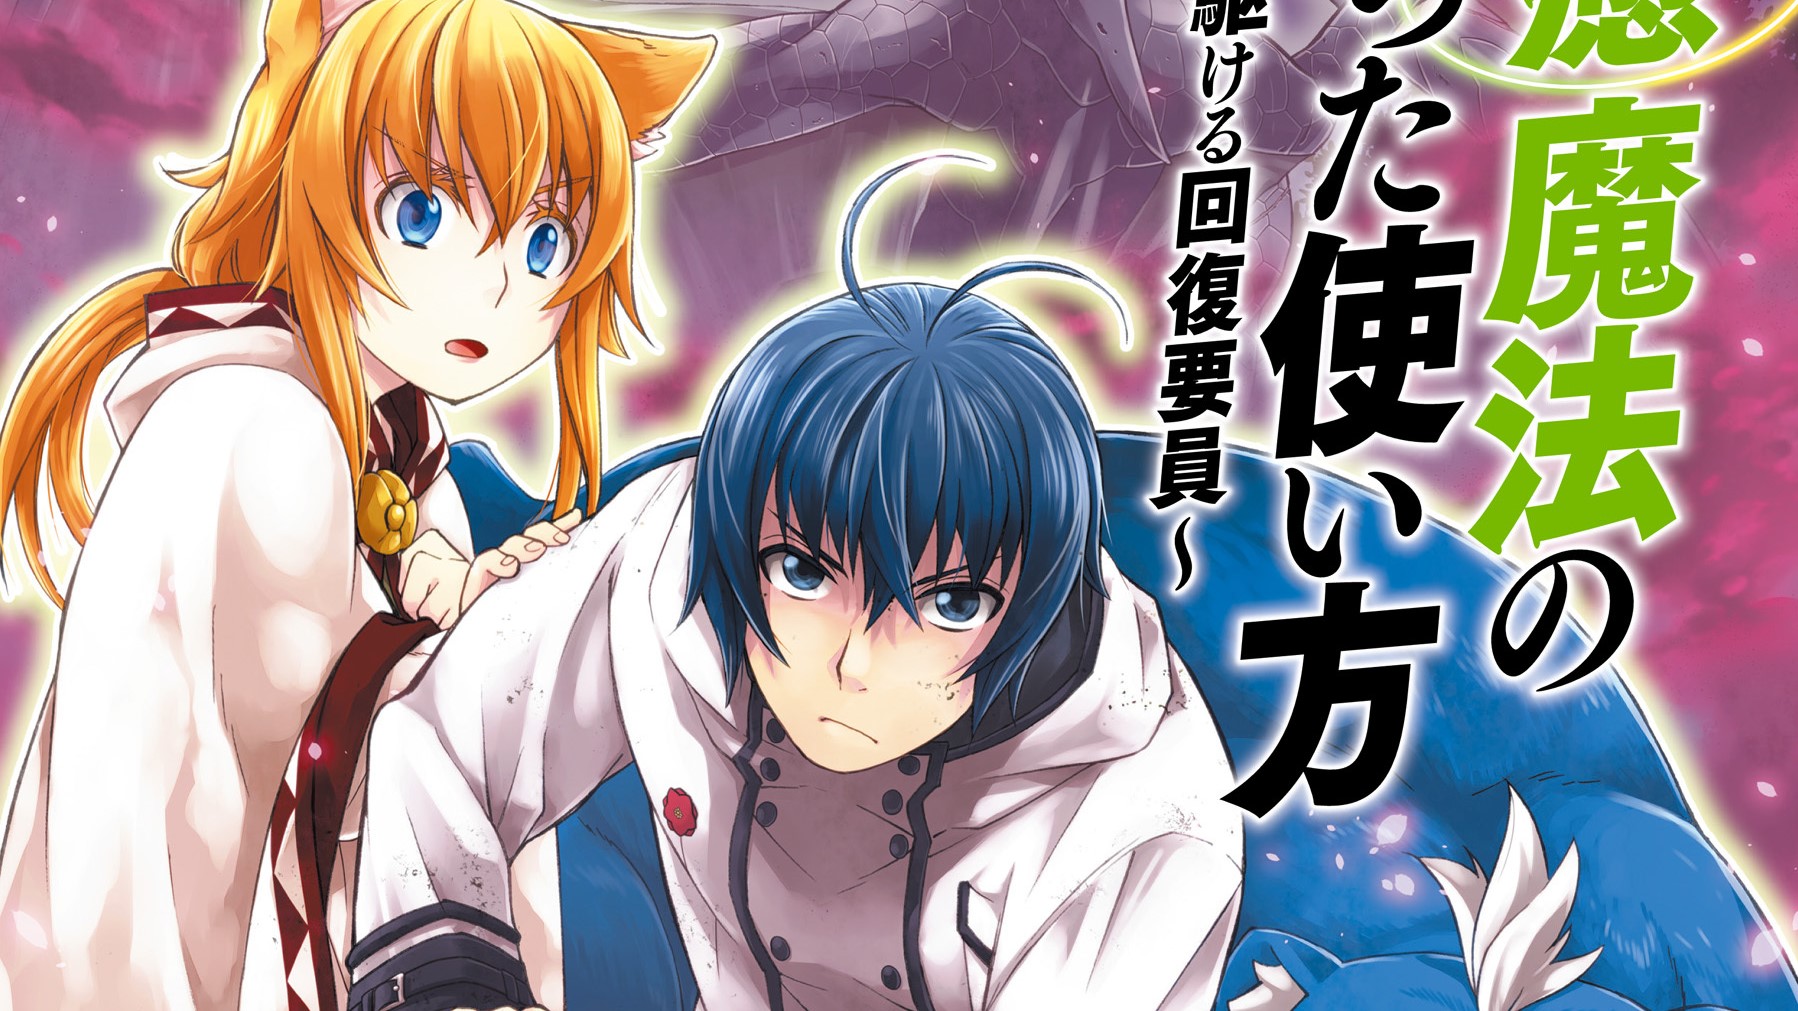 Chiyu Mahō no Machigatta Tsukai-kata Light Novel Gets Anime Adaptation